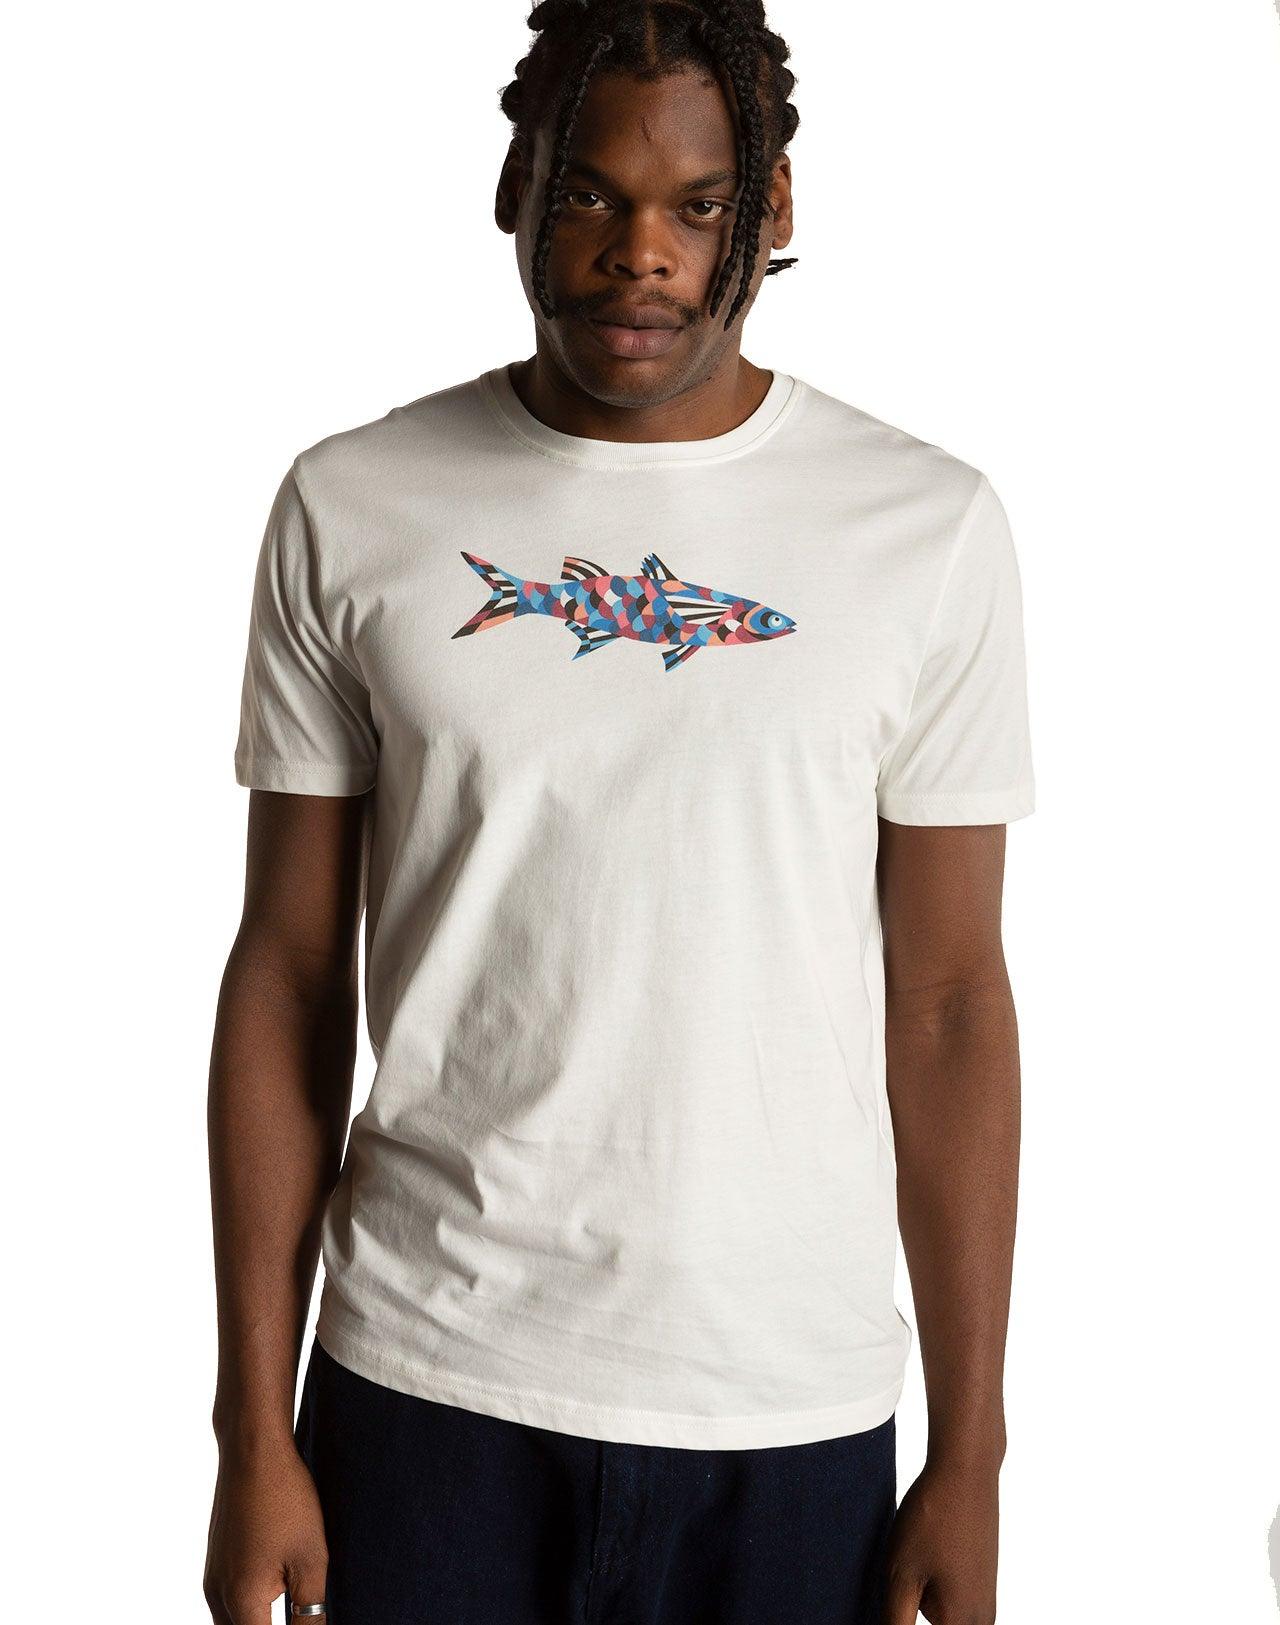 Camiseta Colorfullfish - ECRU